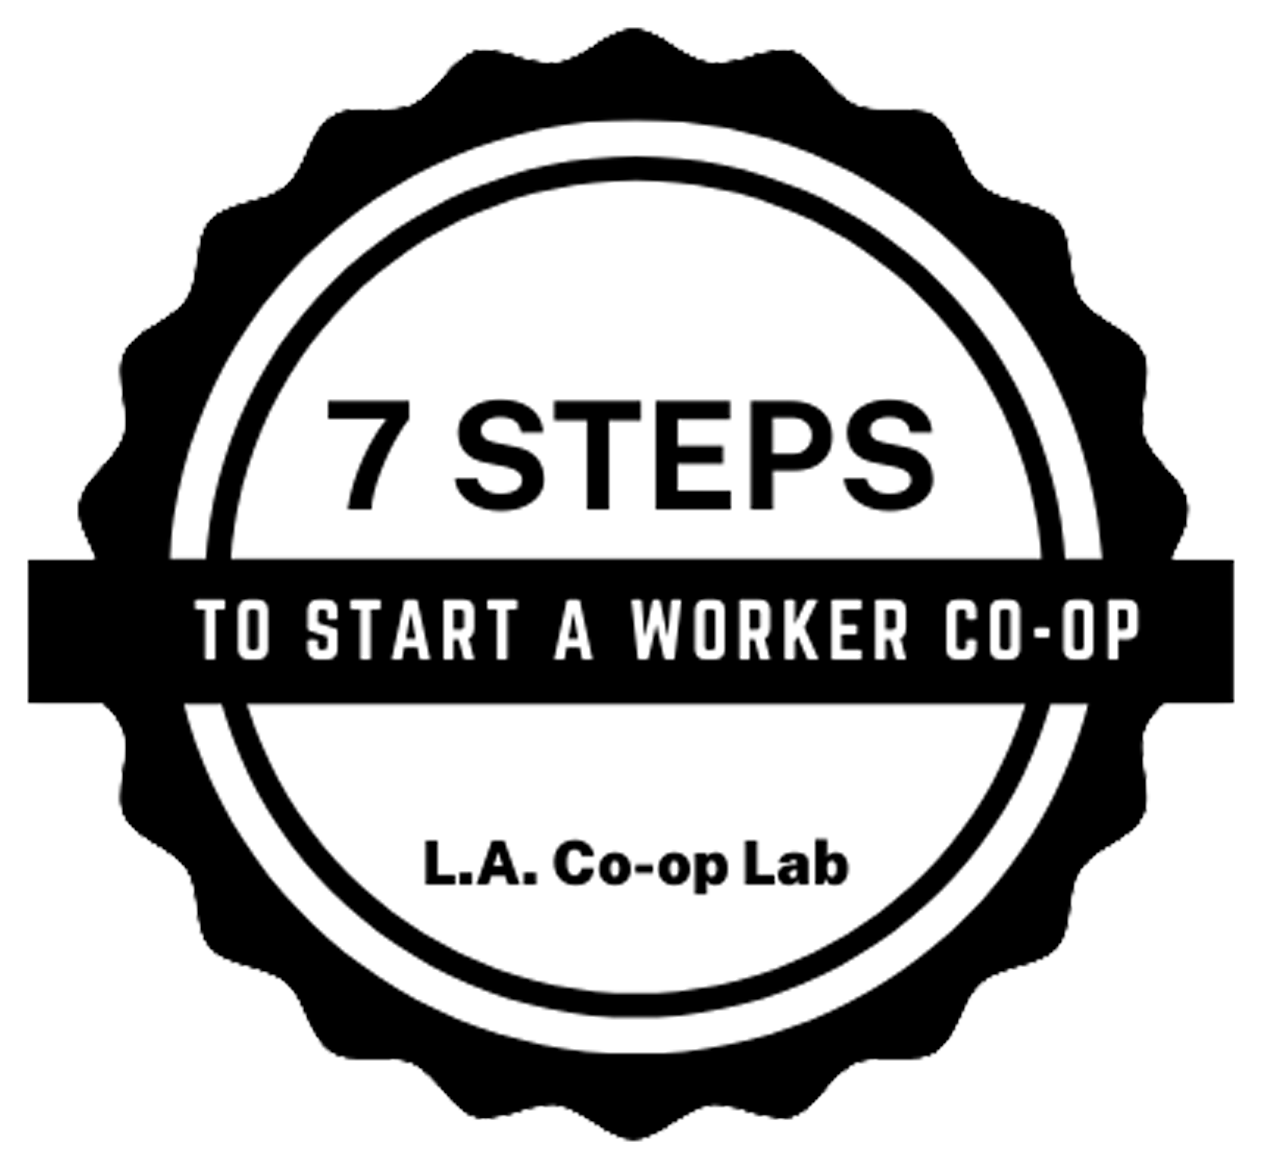 L.A. Co-op Lab